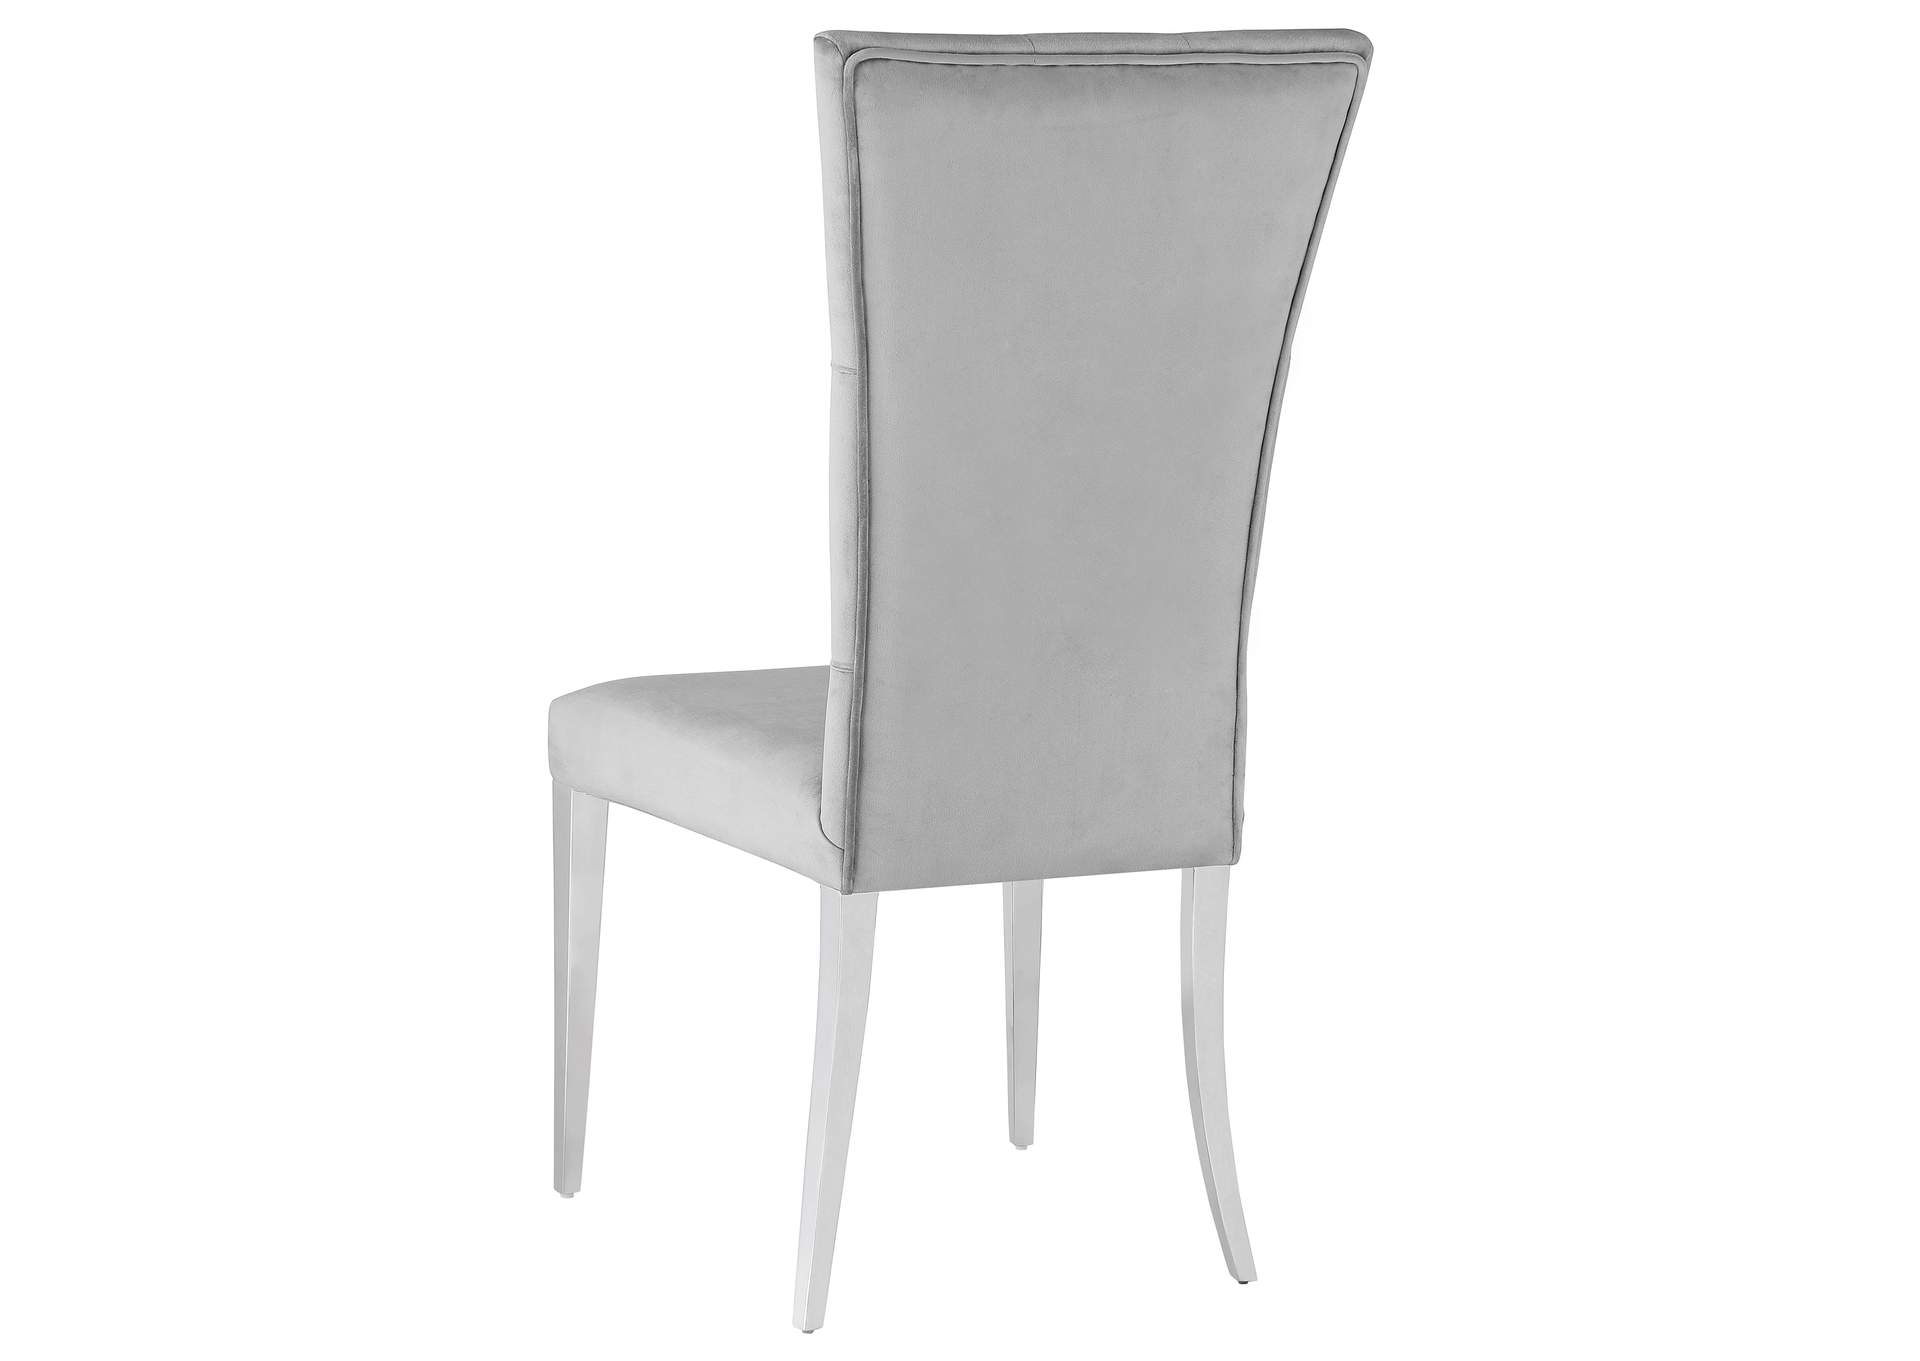 Kerwin 5-piece Dining Room Set Grey and Chrome,Coaster Furniture